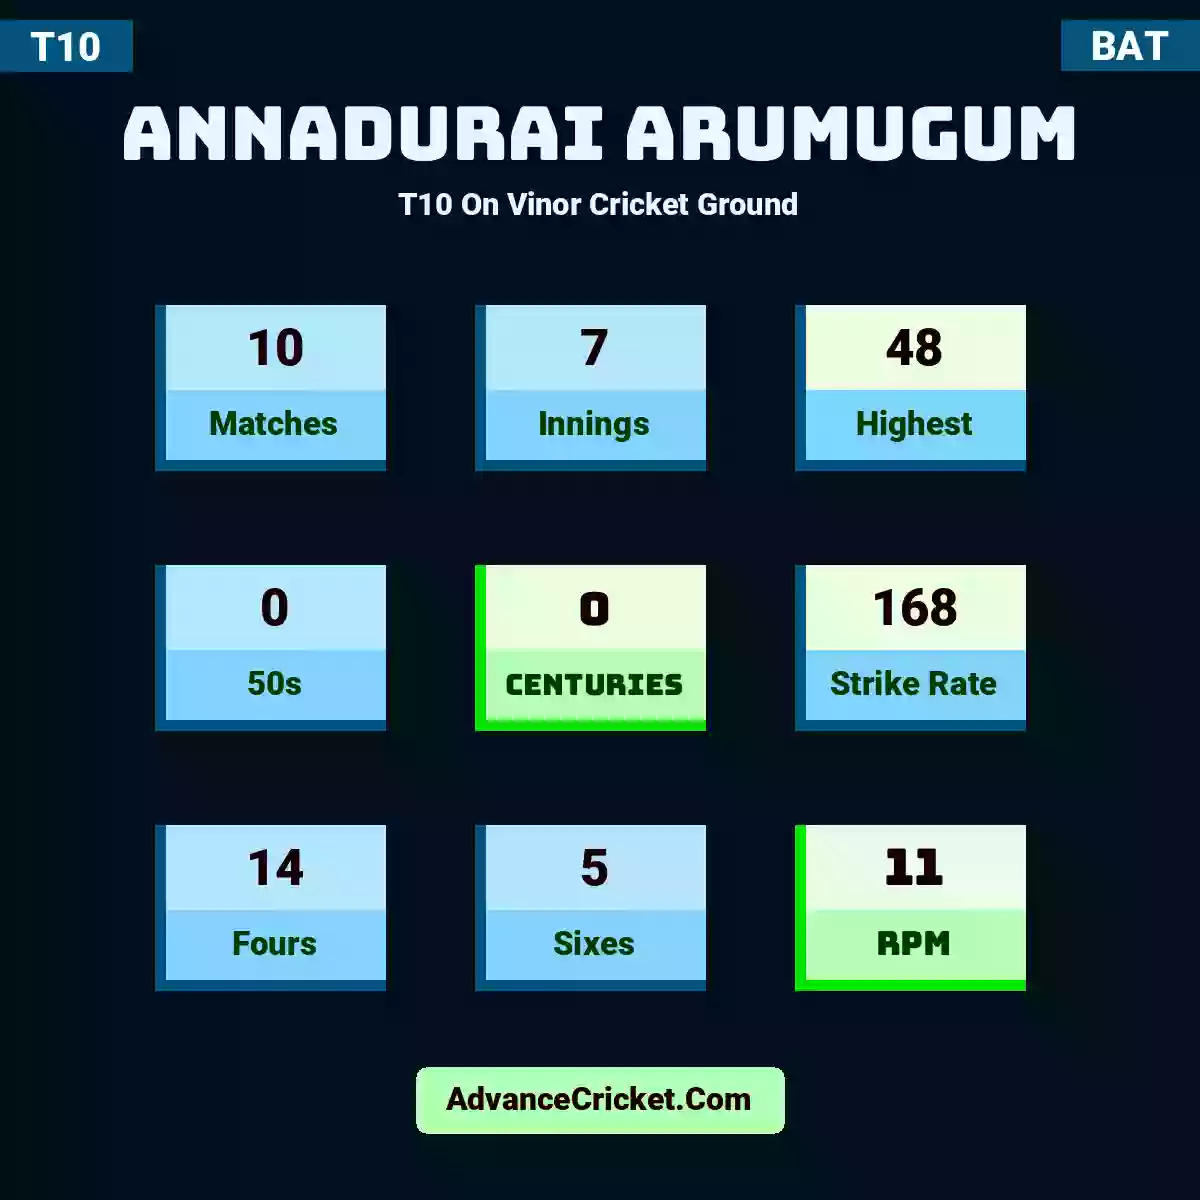 Annadurai Arumugum T10  On Vinor Cricket Ground, Annadurai Arumugum played 10 matches, scored 48 runs as highest, 0 half-centuries, and 0 centuries, with a strike rate of 168. A.Arumugum hit 14 fours and 5 sixes, with an RPM of 11.